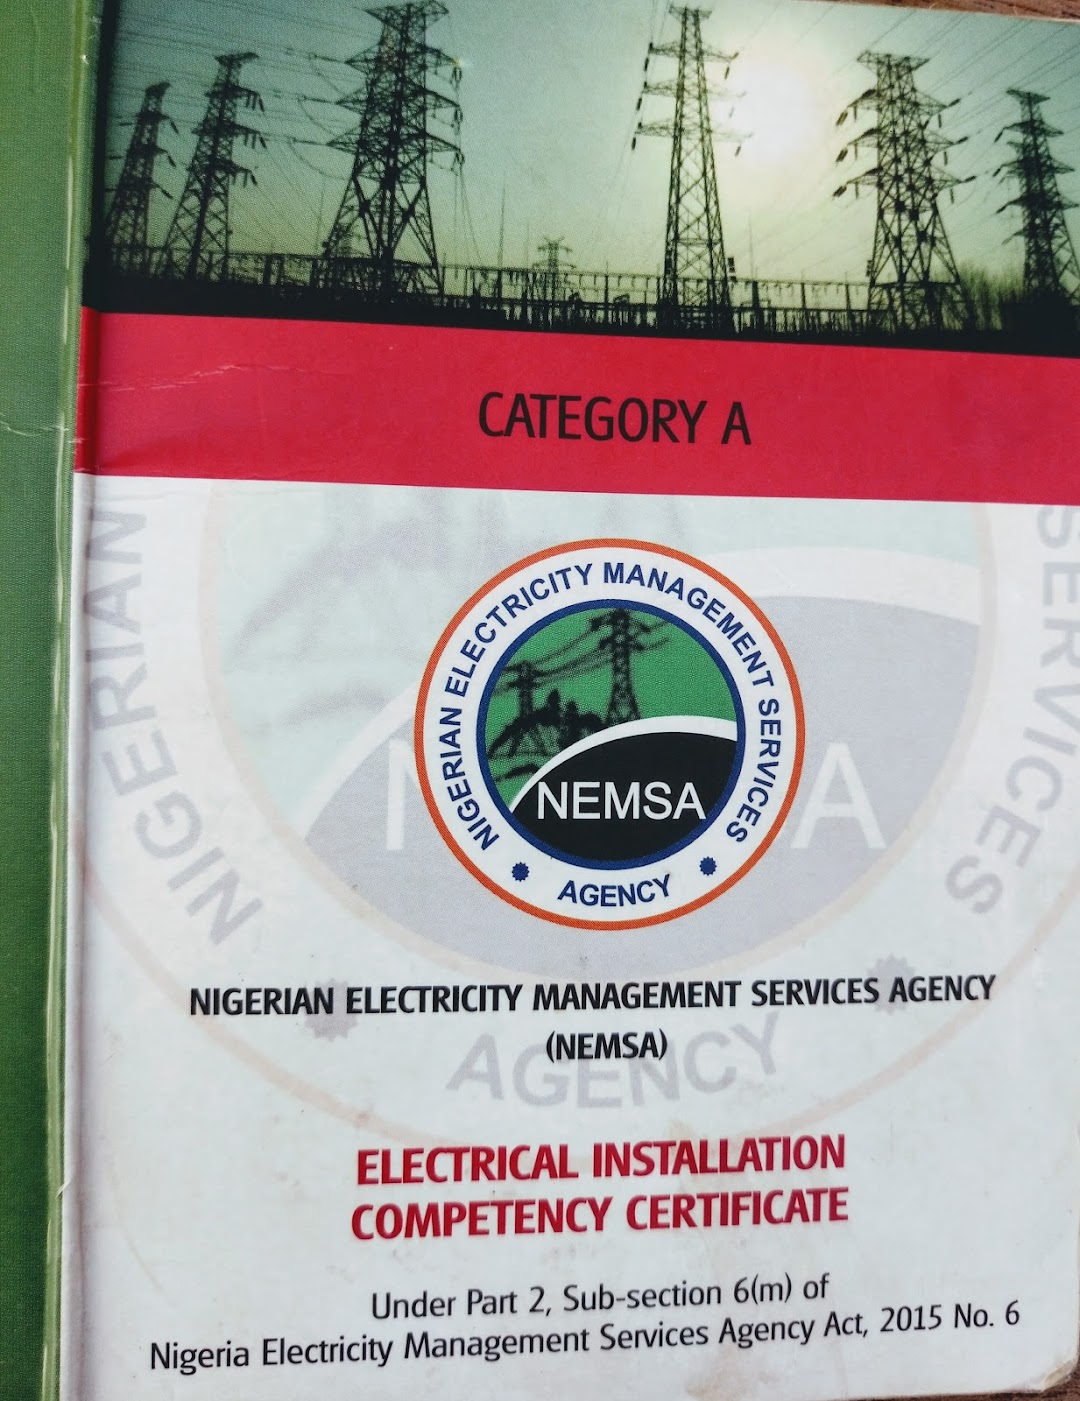 Licenced Electrical Contractors Association (Lecan)